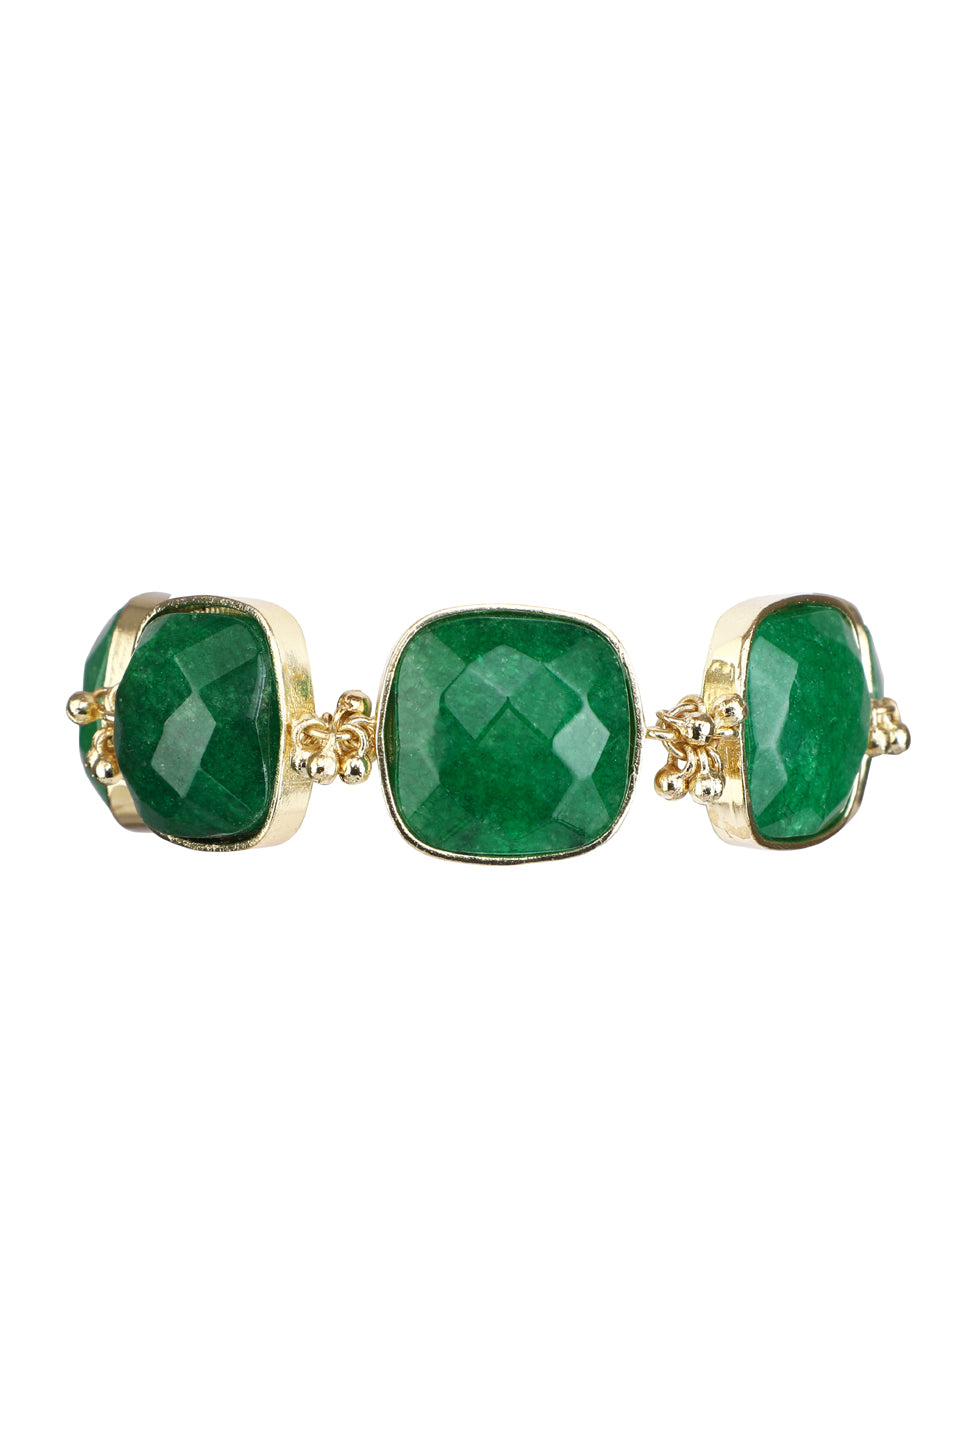 Square Green Stone Bracelet